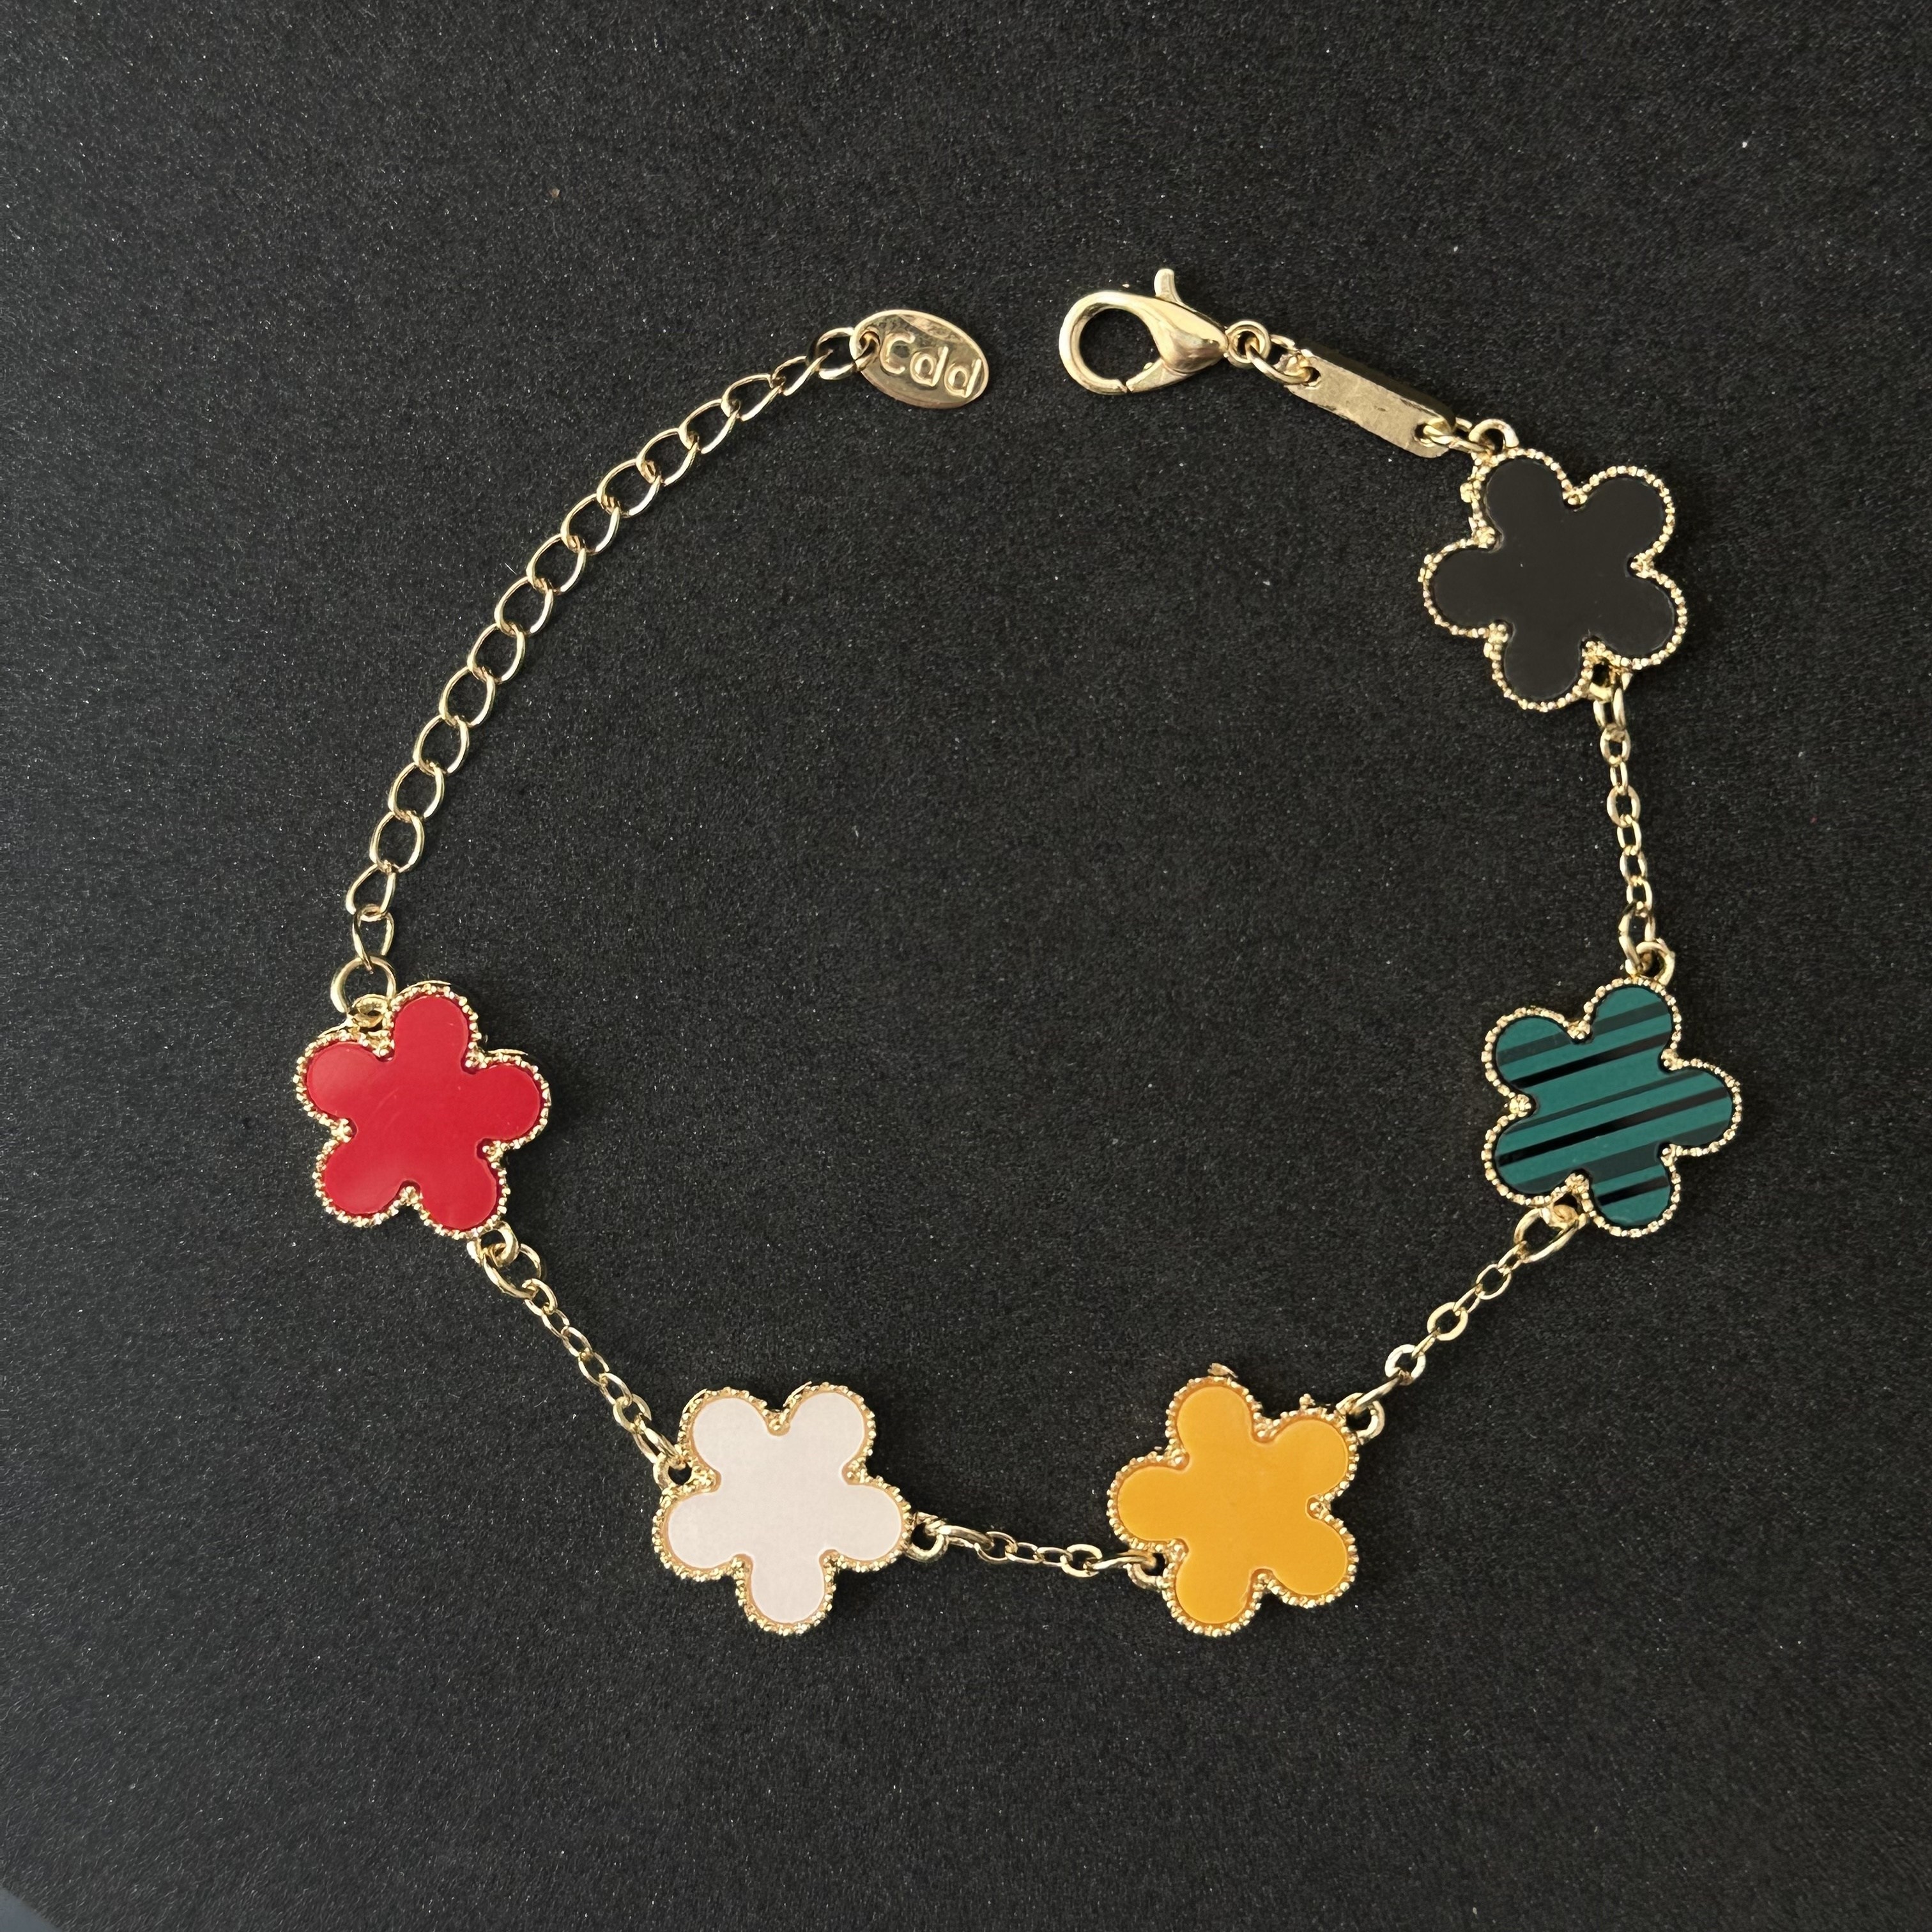 Four Leaf Clover Bracelet for Friendship Gift - Best Friend Gift